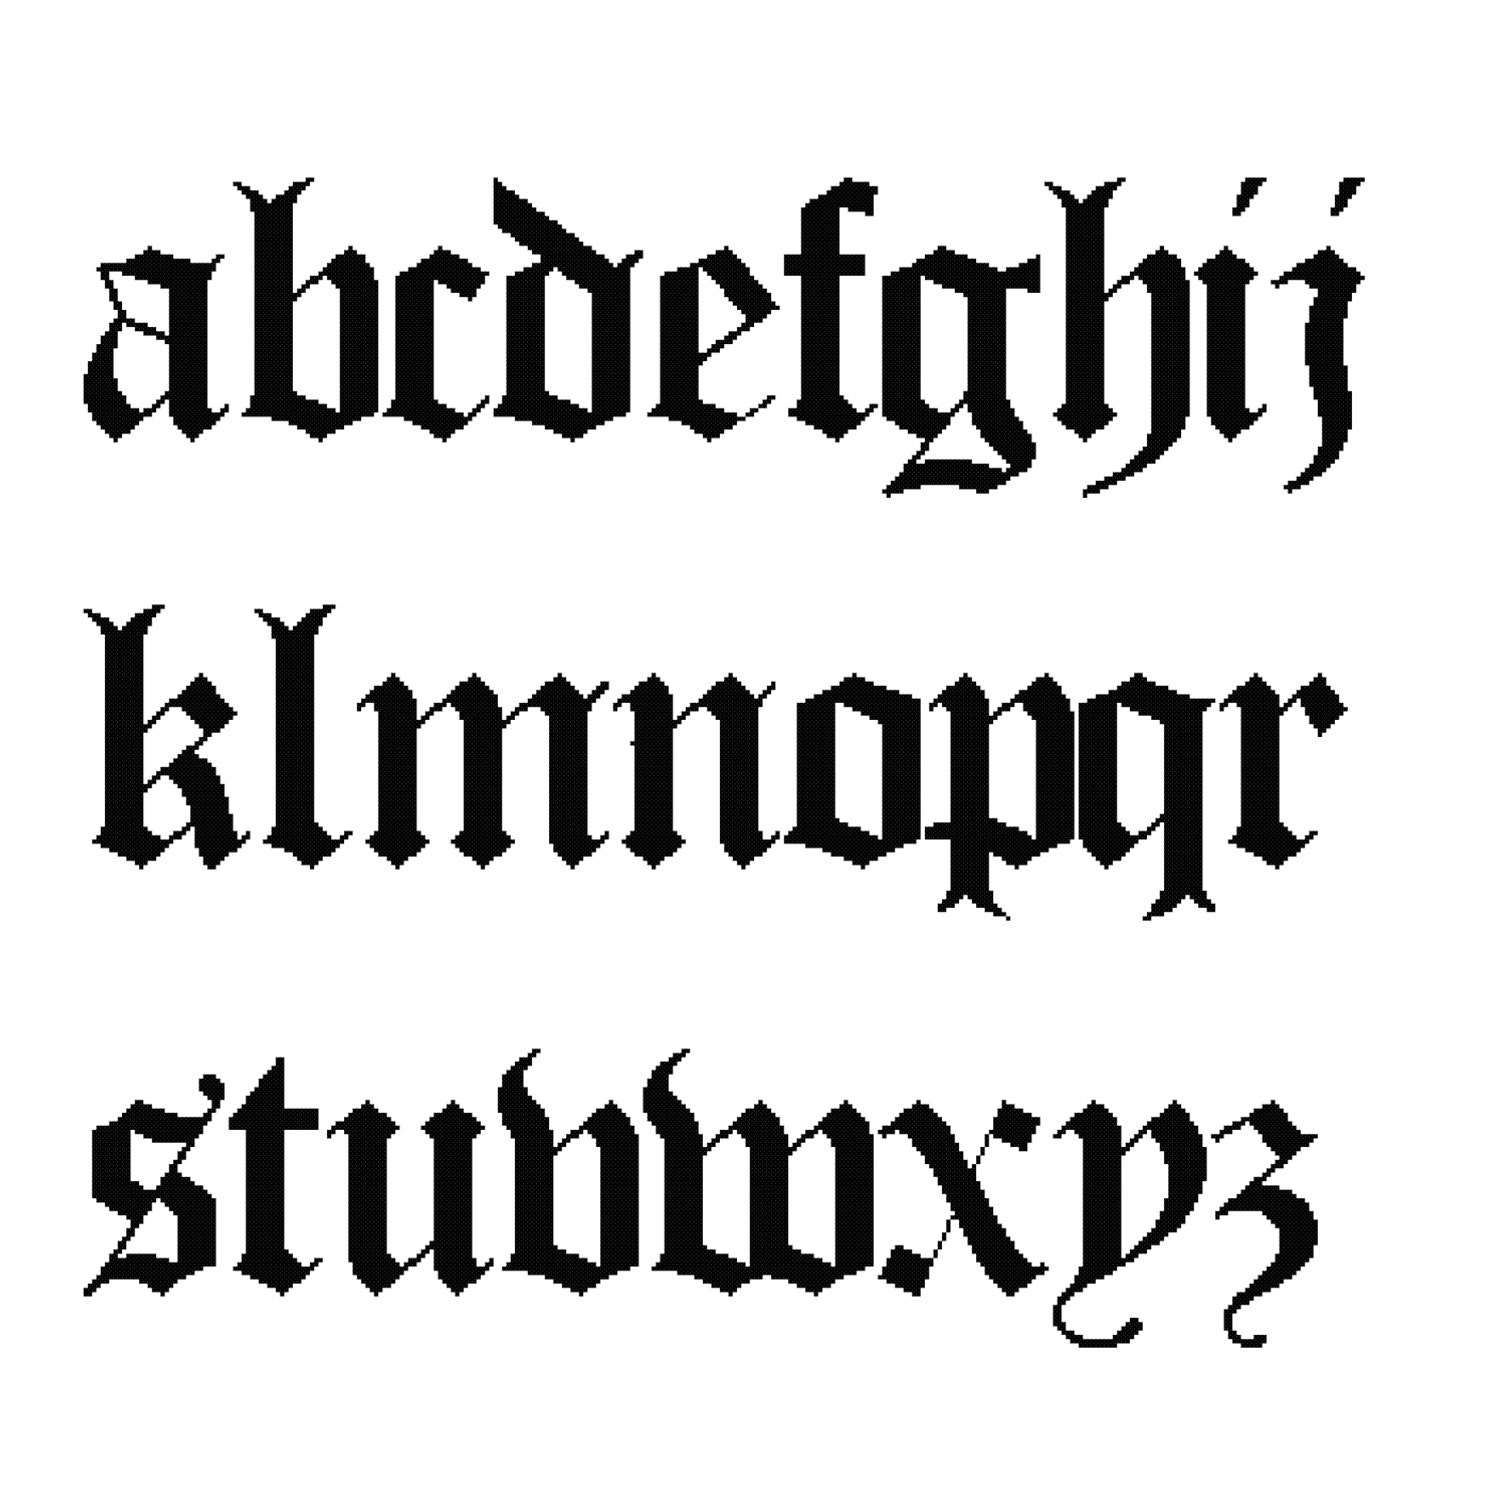 Old English Font Celtic Font Old English Calligraphy Old English Letters  Font Old English Cursive Font Old English Alphabet Font 